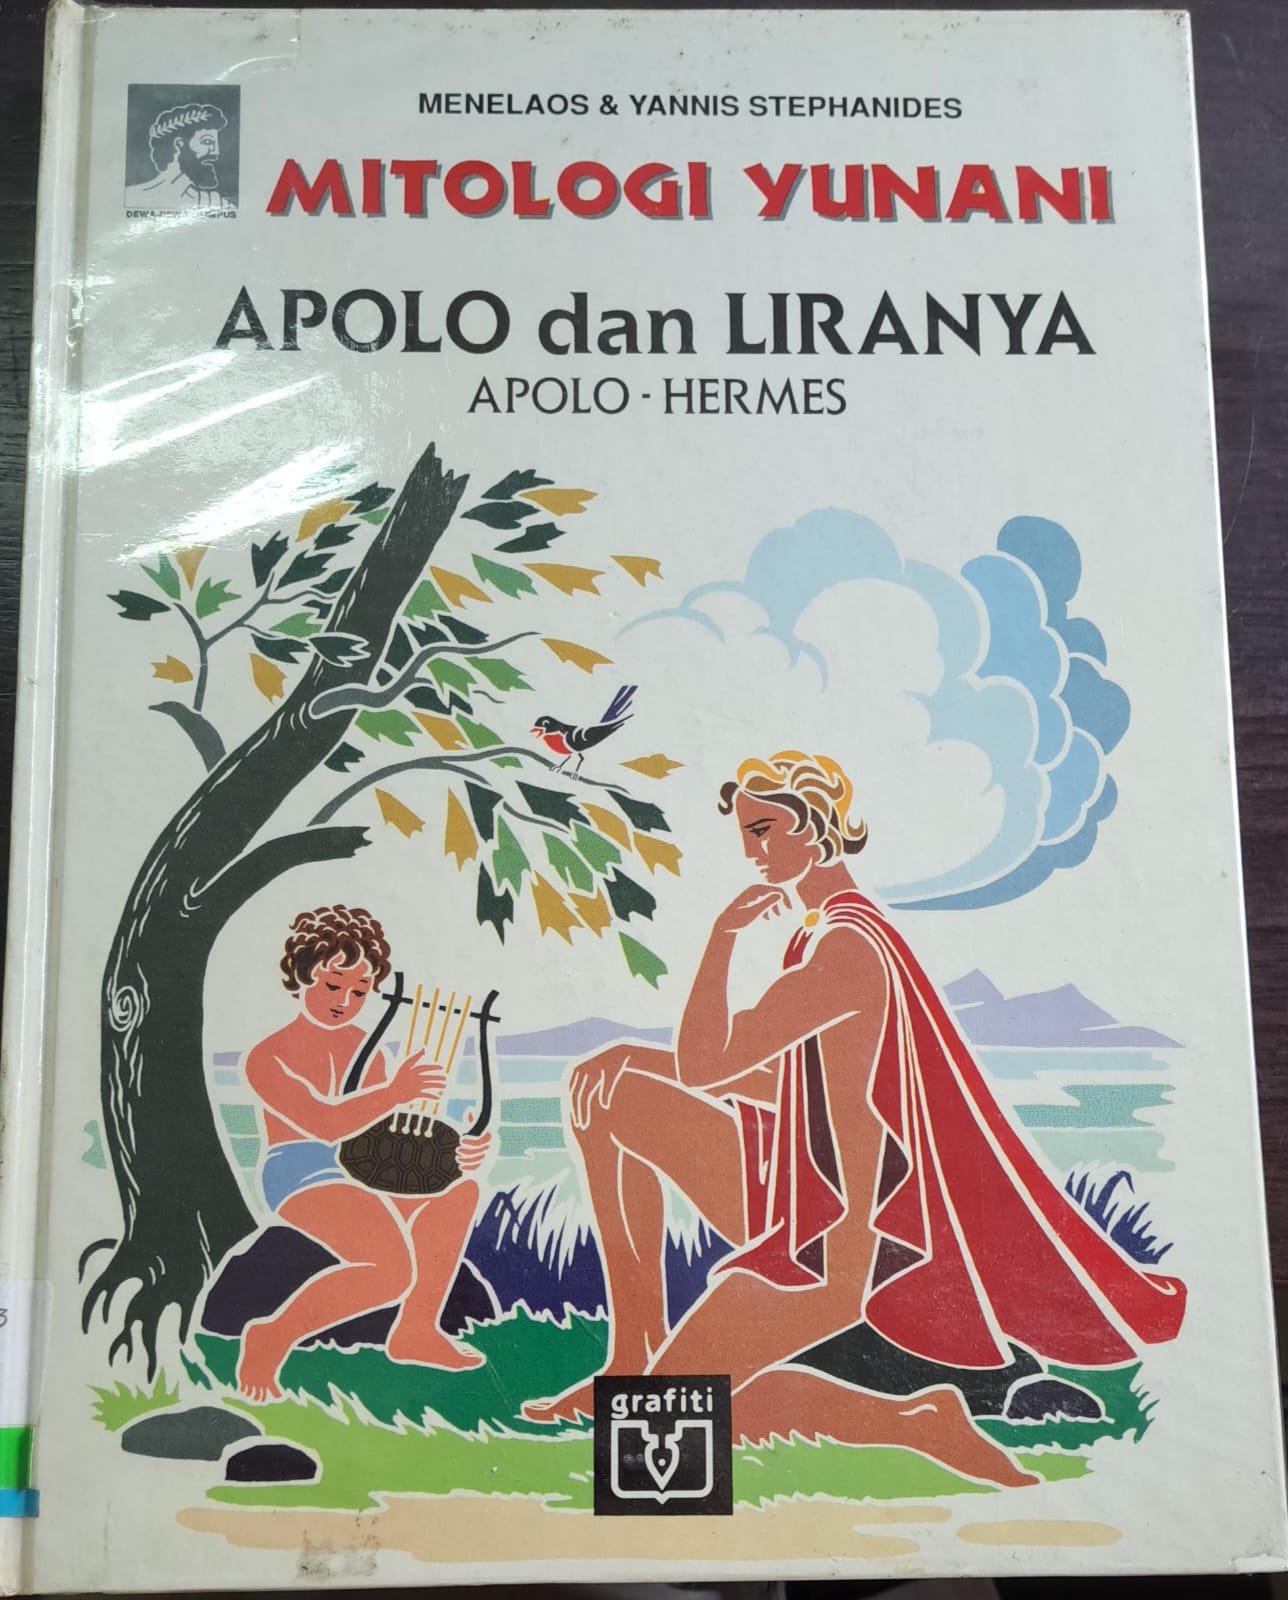 Mitologi yunani :  Apolo dan liranya 'apolo-hermes' seri A no 3